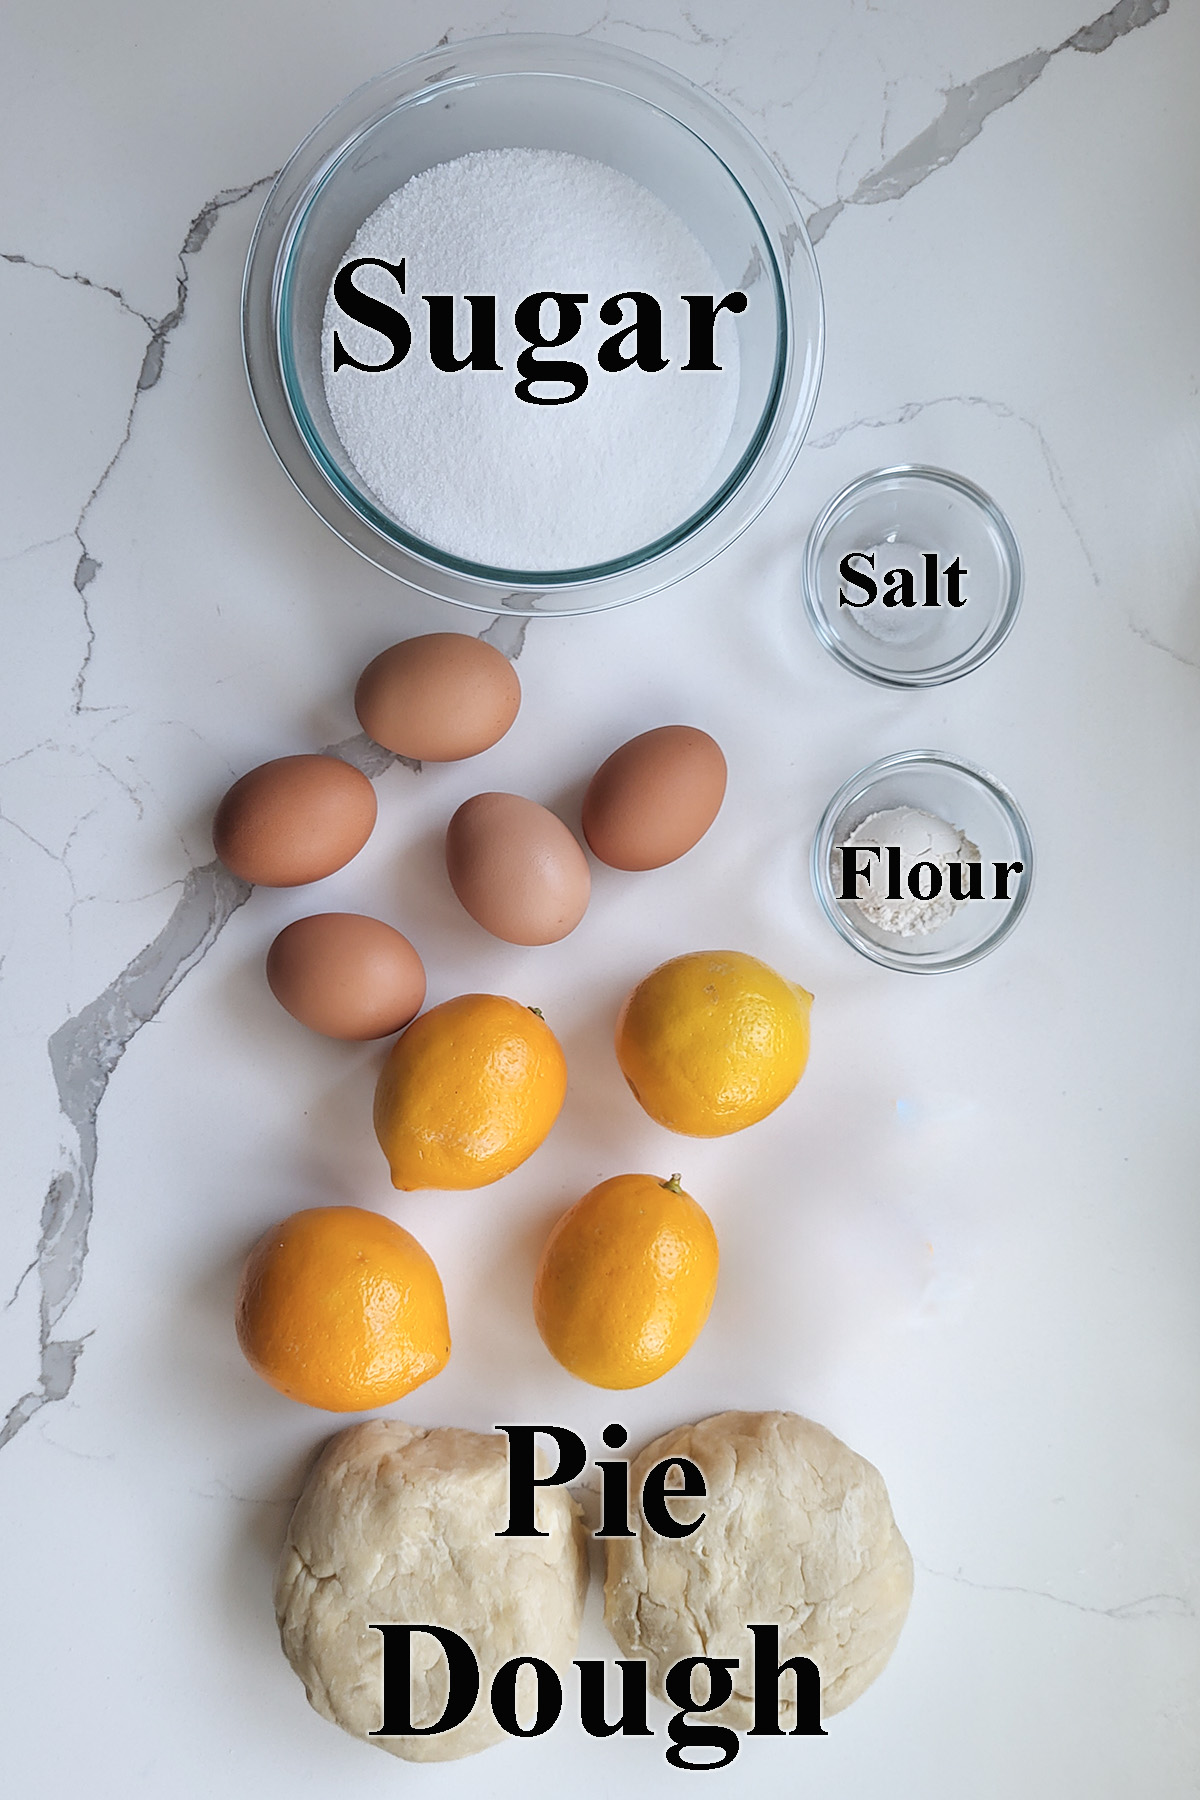 ingredients for lemon shaker pie in glass bowls.